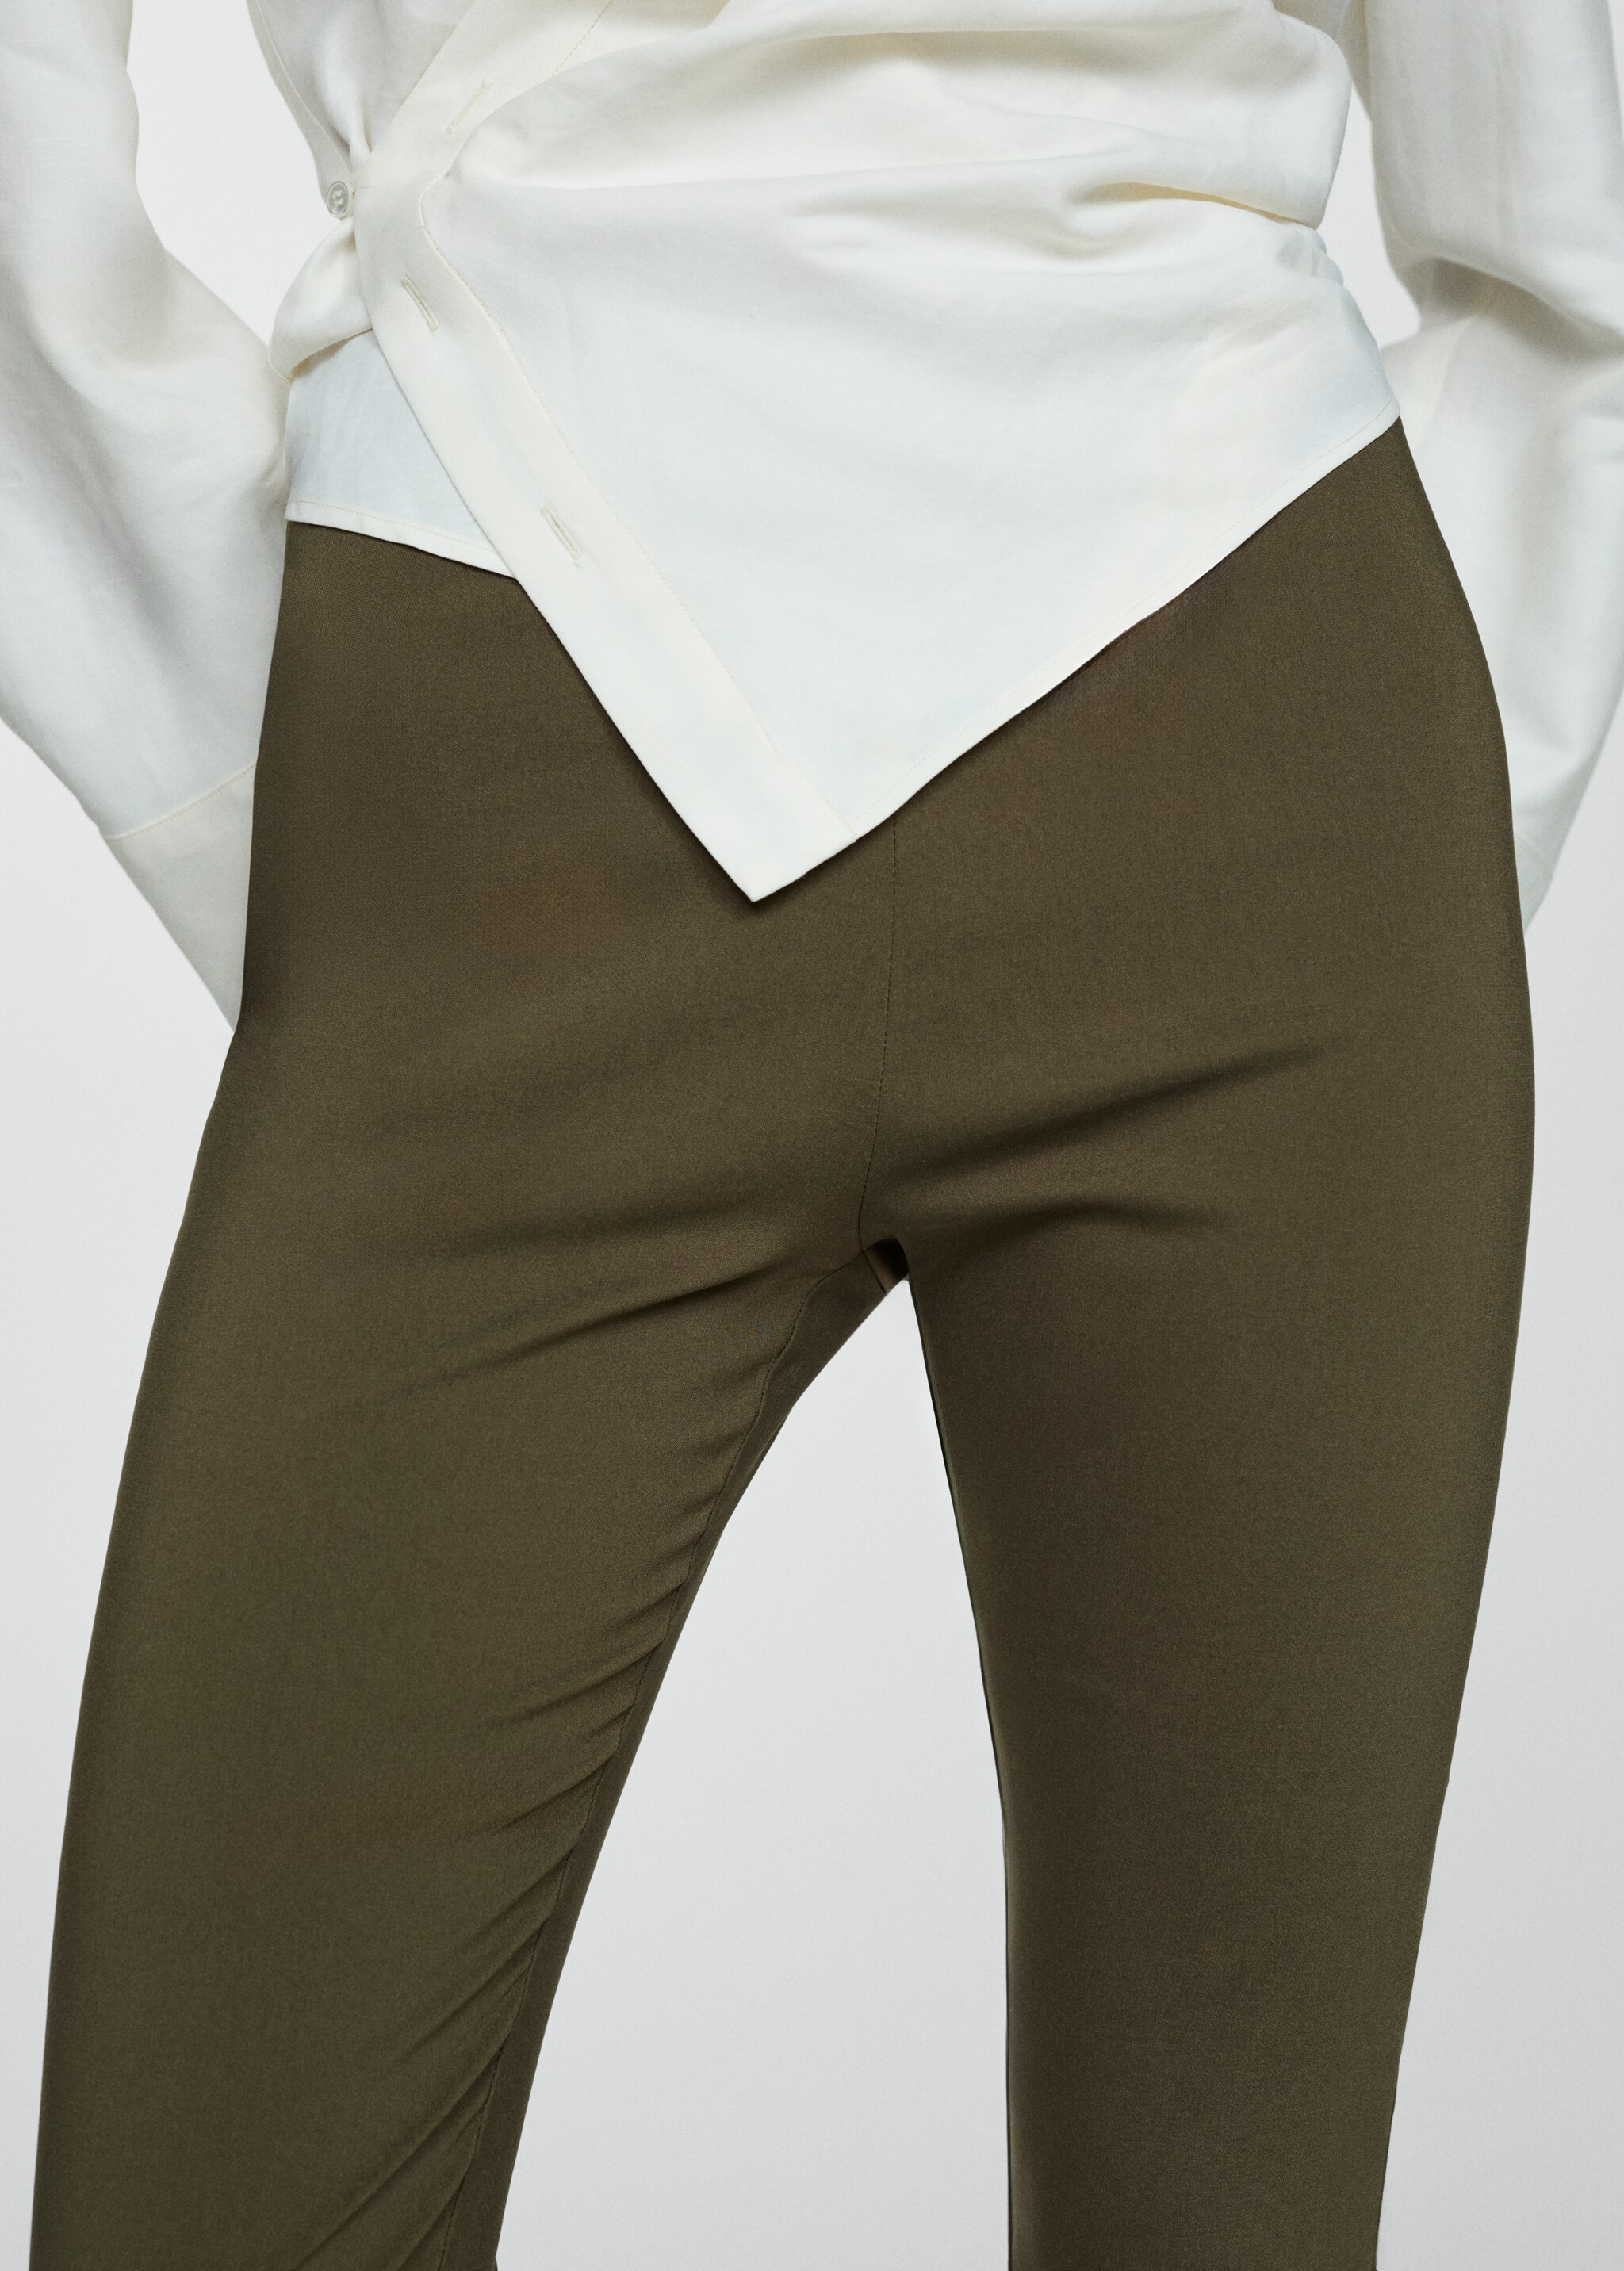 Capri leggings - Details of the article 6